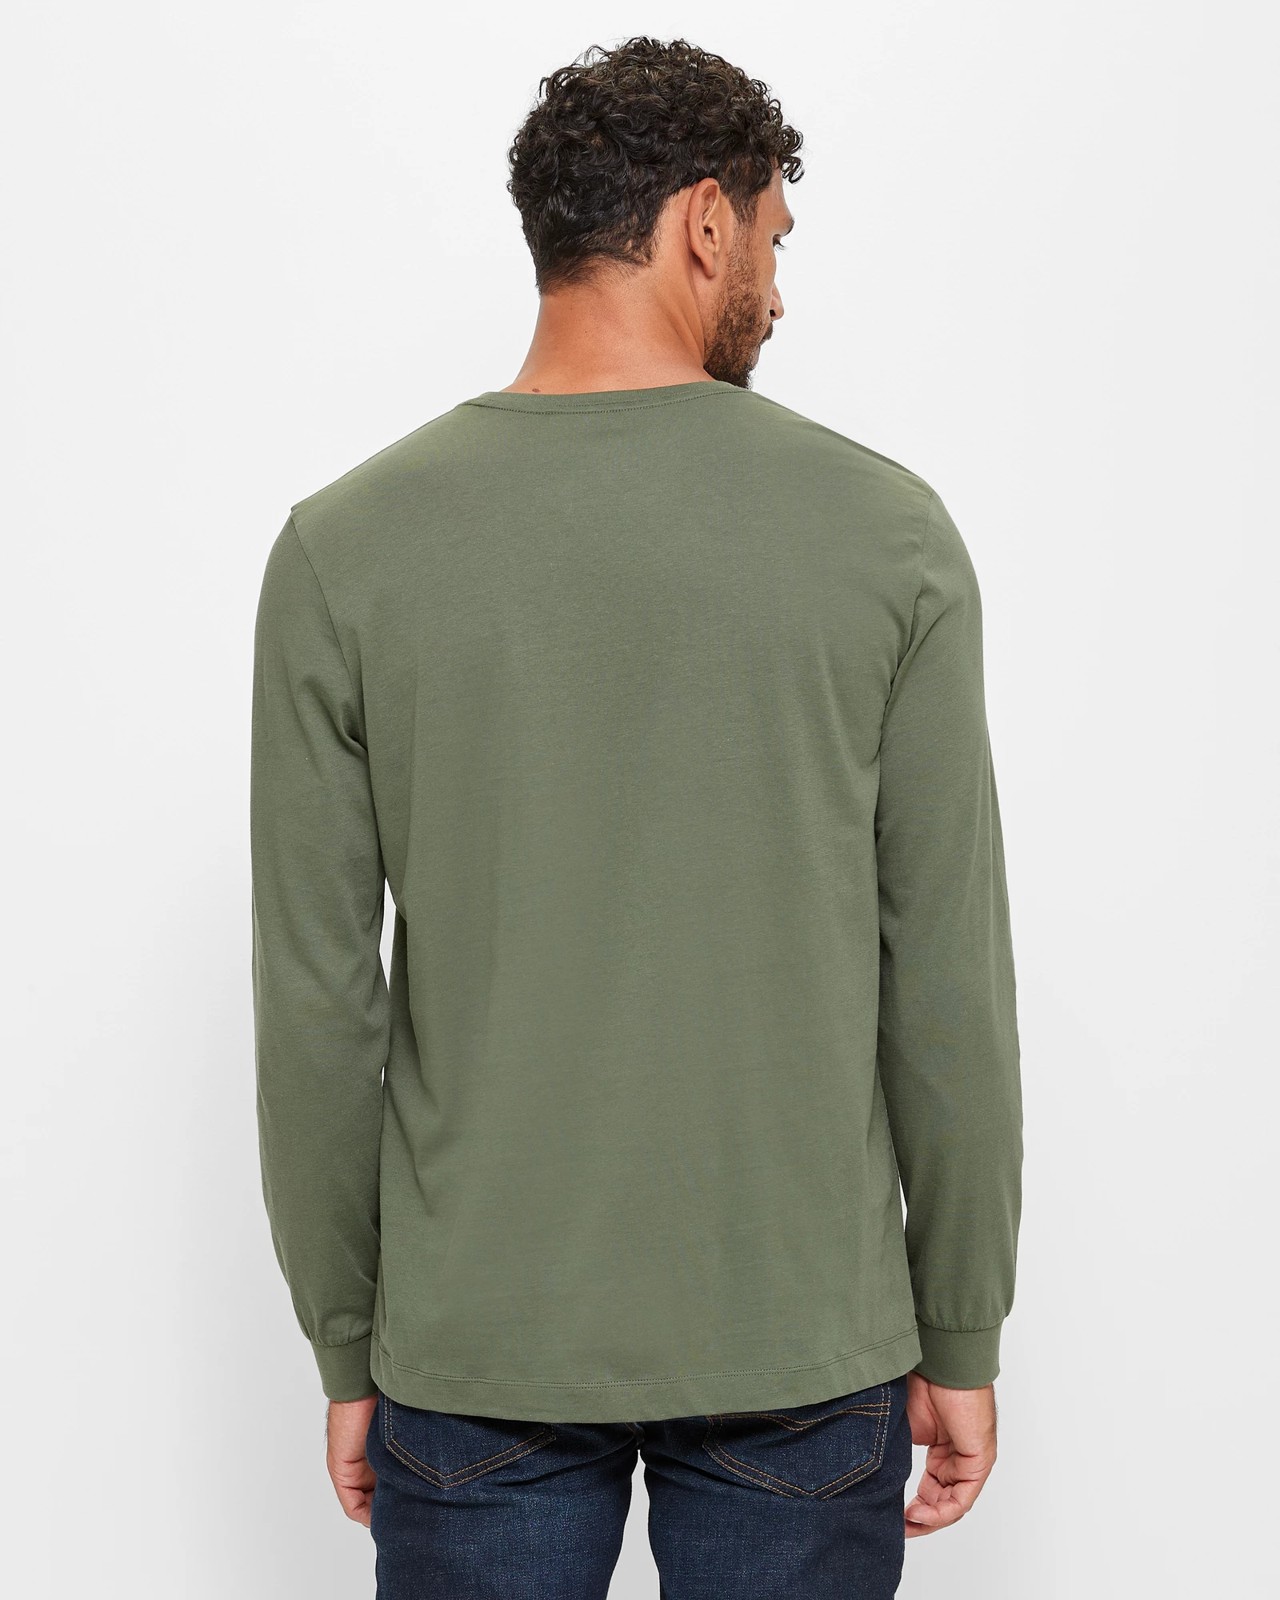 Australian Cotton Long Sleeve T-Shirt - Khaki | Target Australia